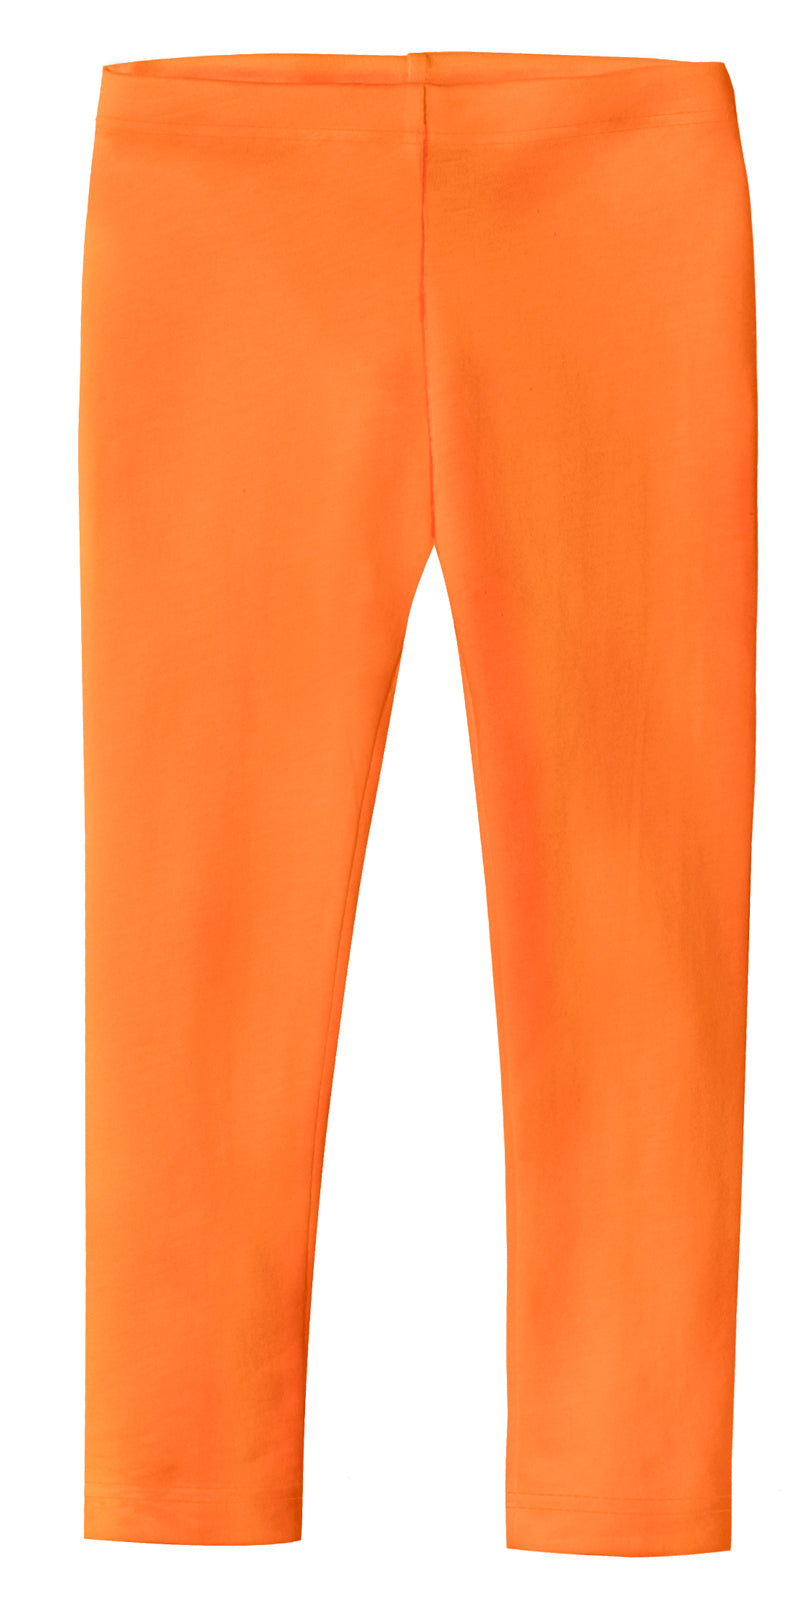  Fila Girls High Waisted Bike Shorts Kids Clothing Activewear  (Orange Pop, Small): Clothing, Shoes & Jewelry